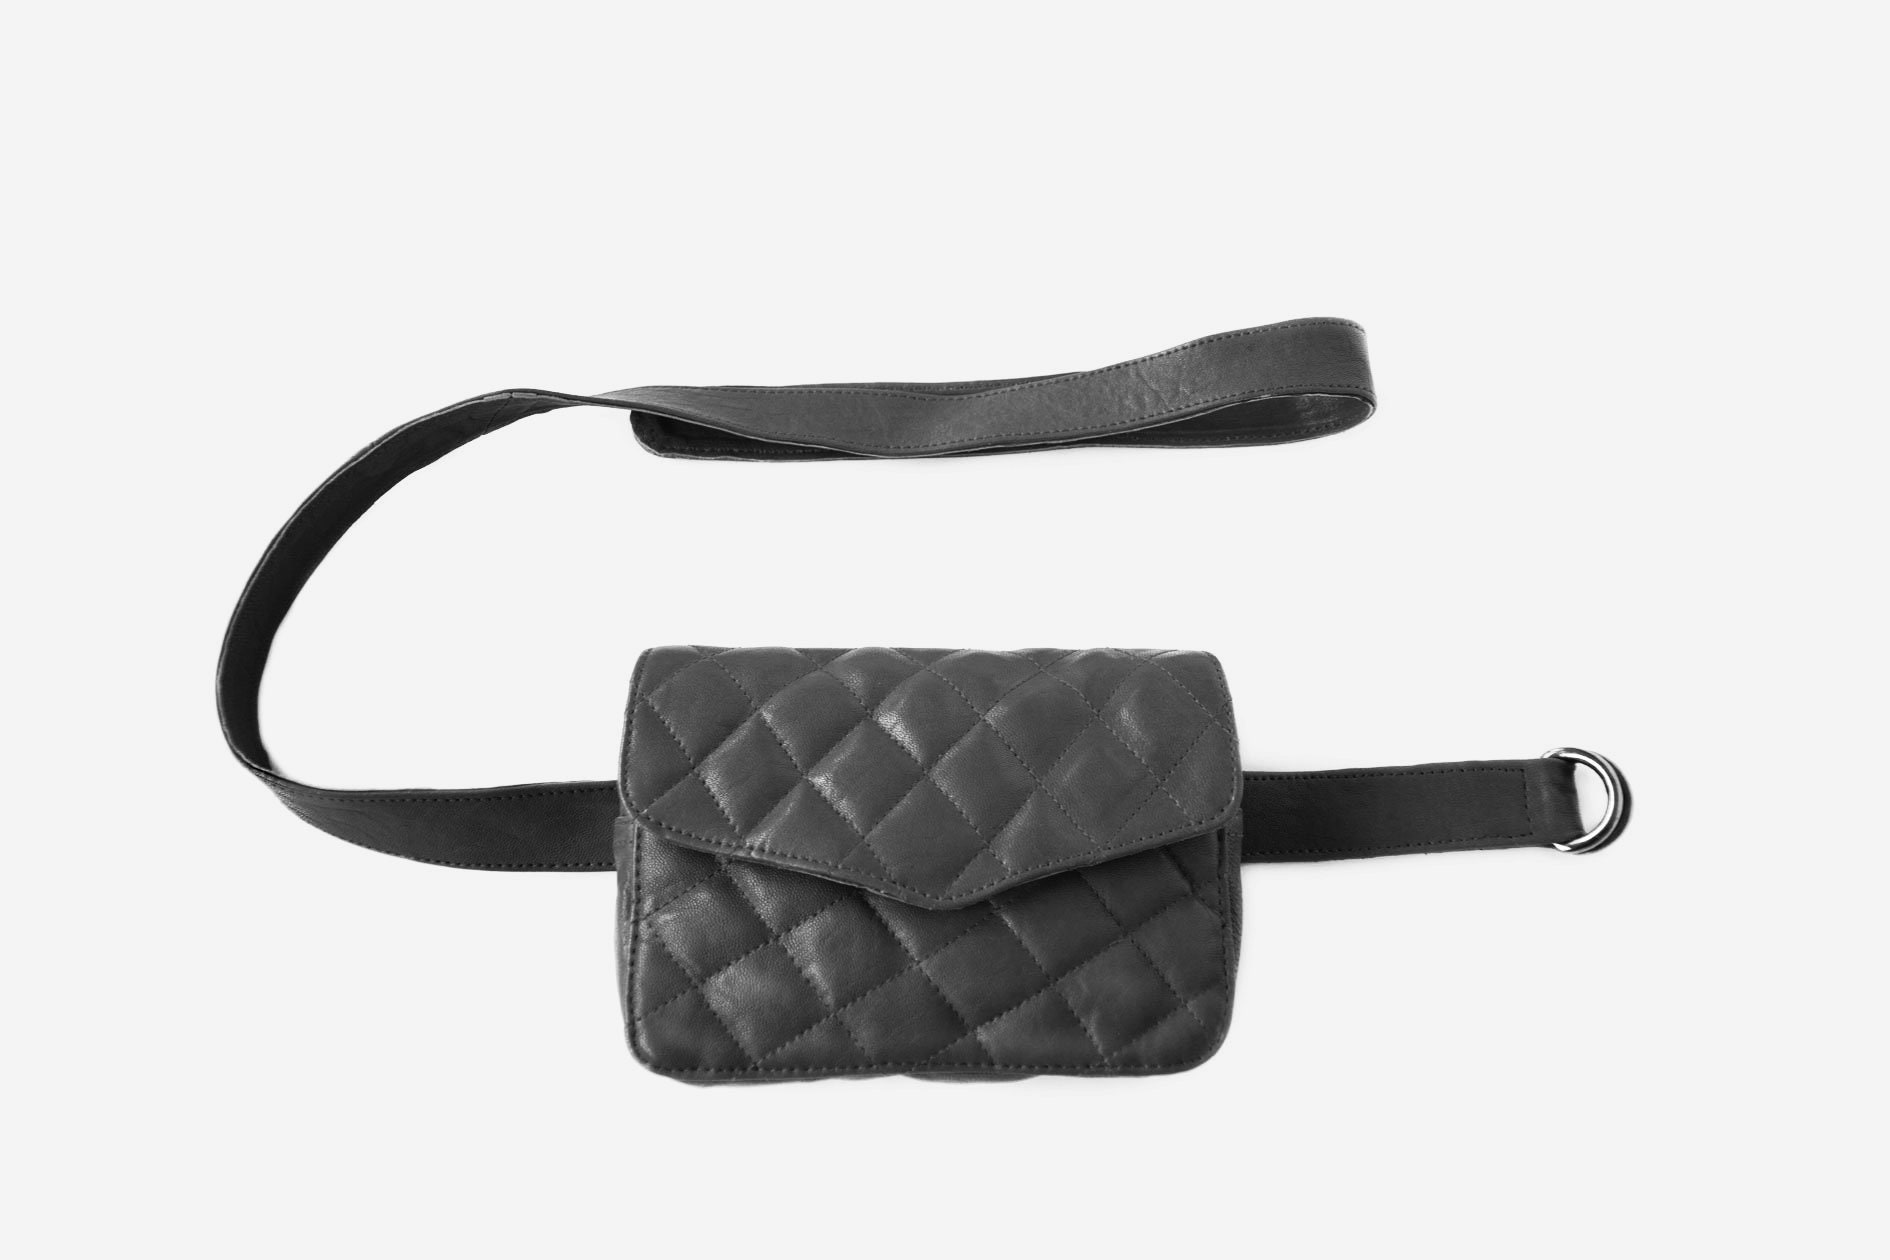 Buy Chanel Belt Bag Online In India -  India